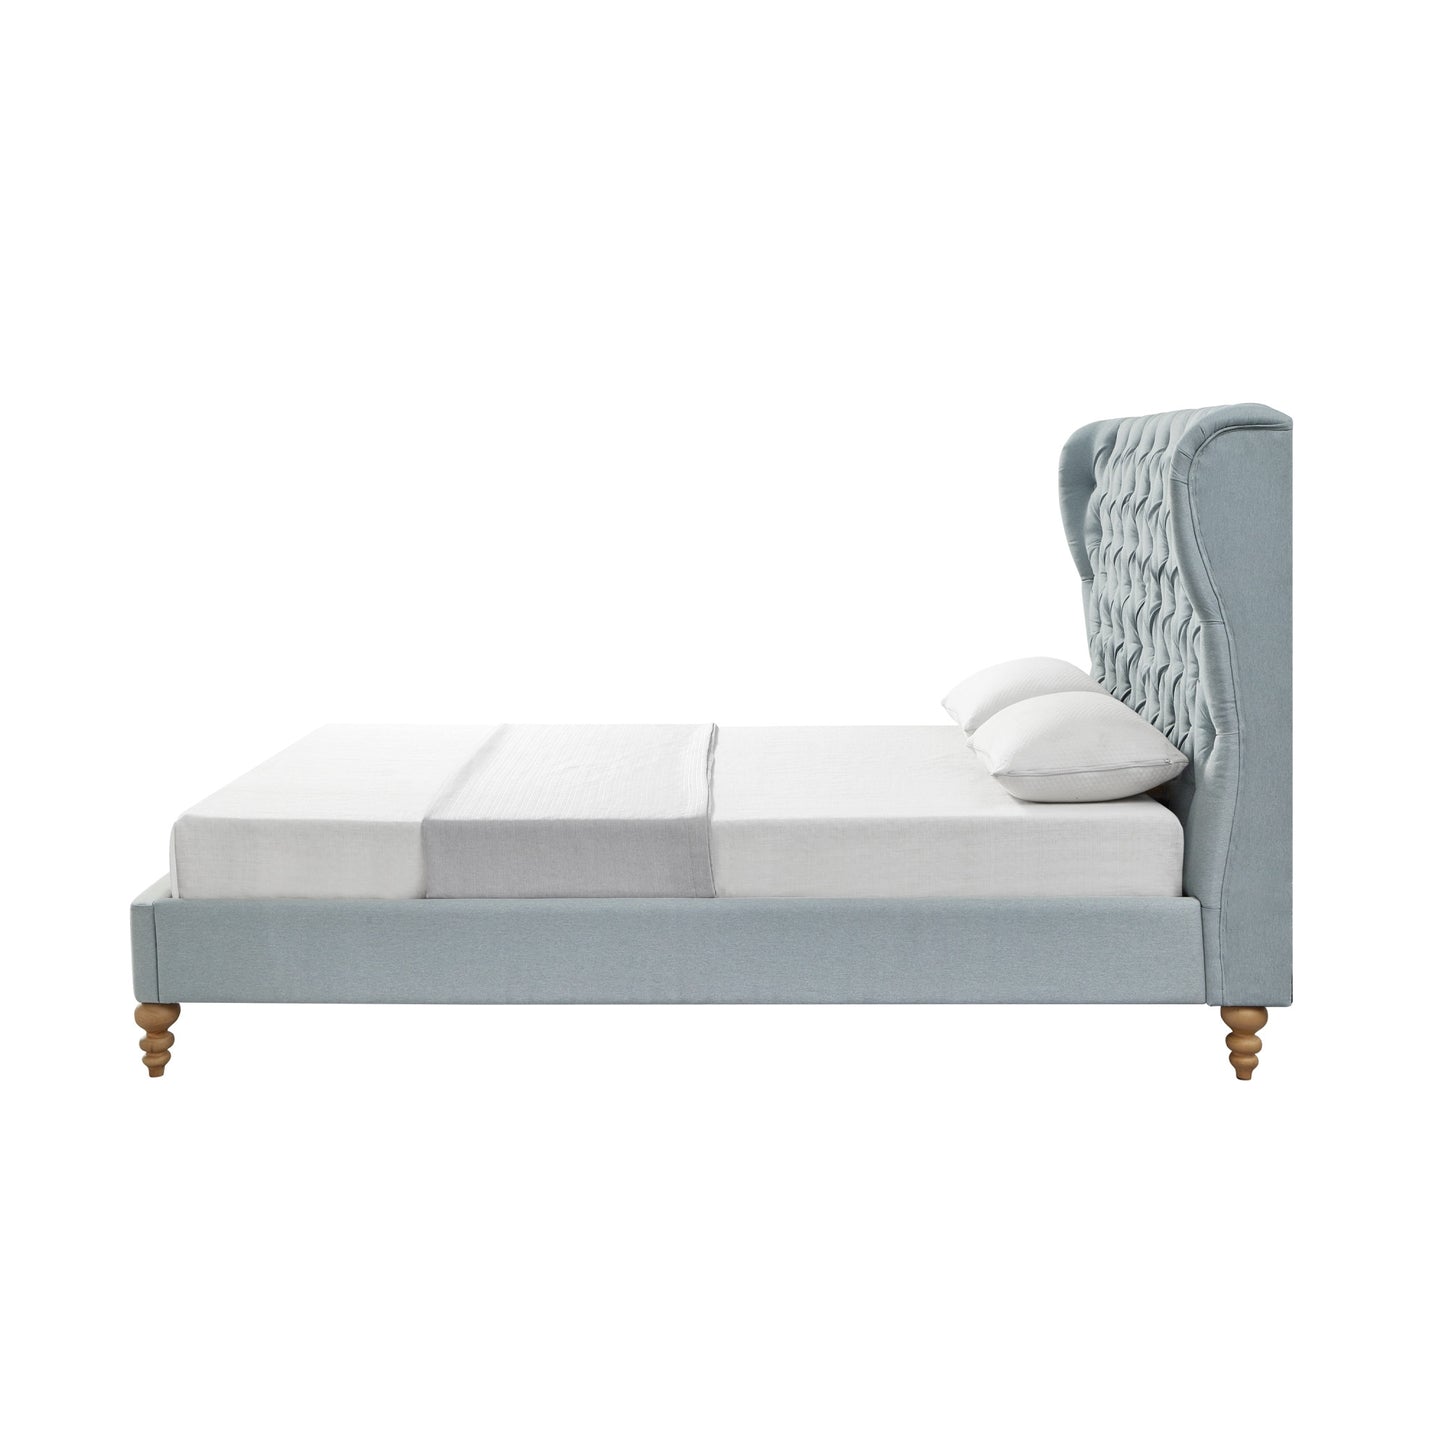 Blue Solid Wood King Tufted Upholstered Linen Bed